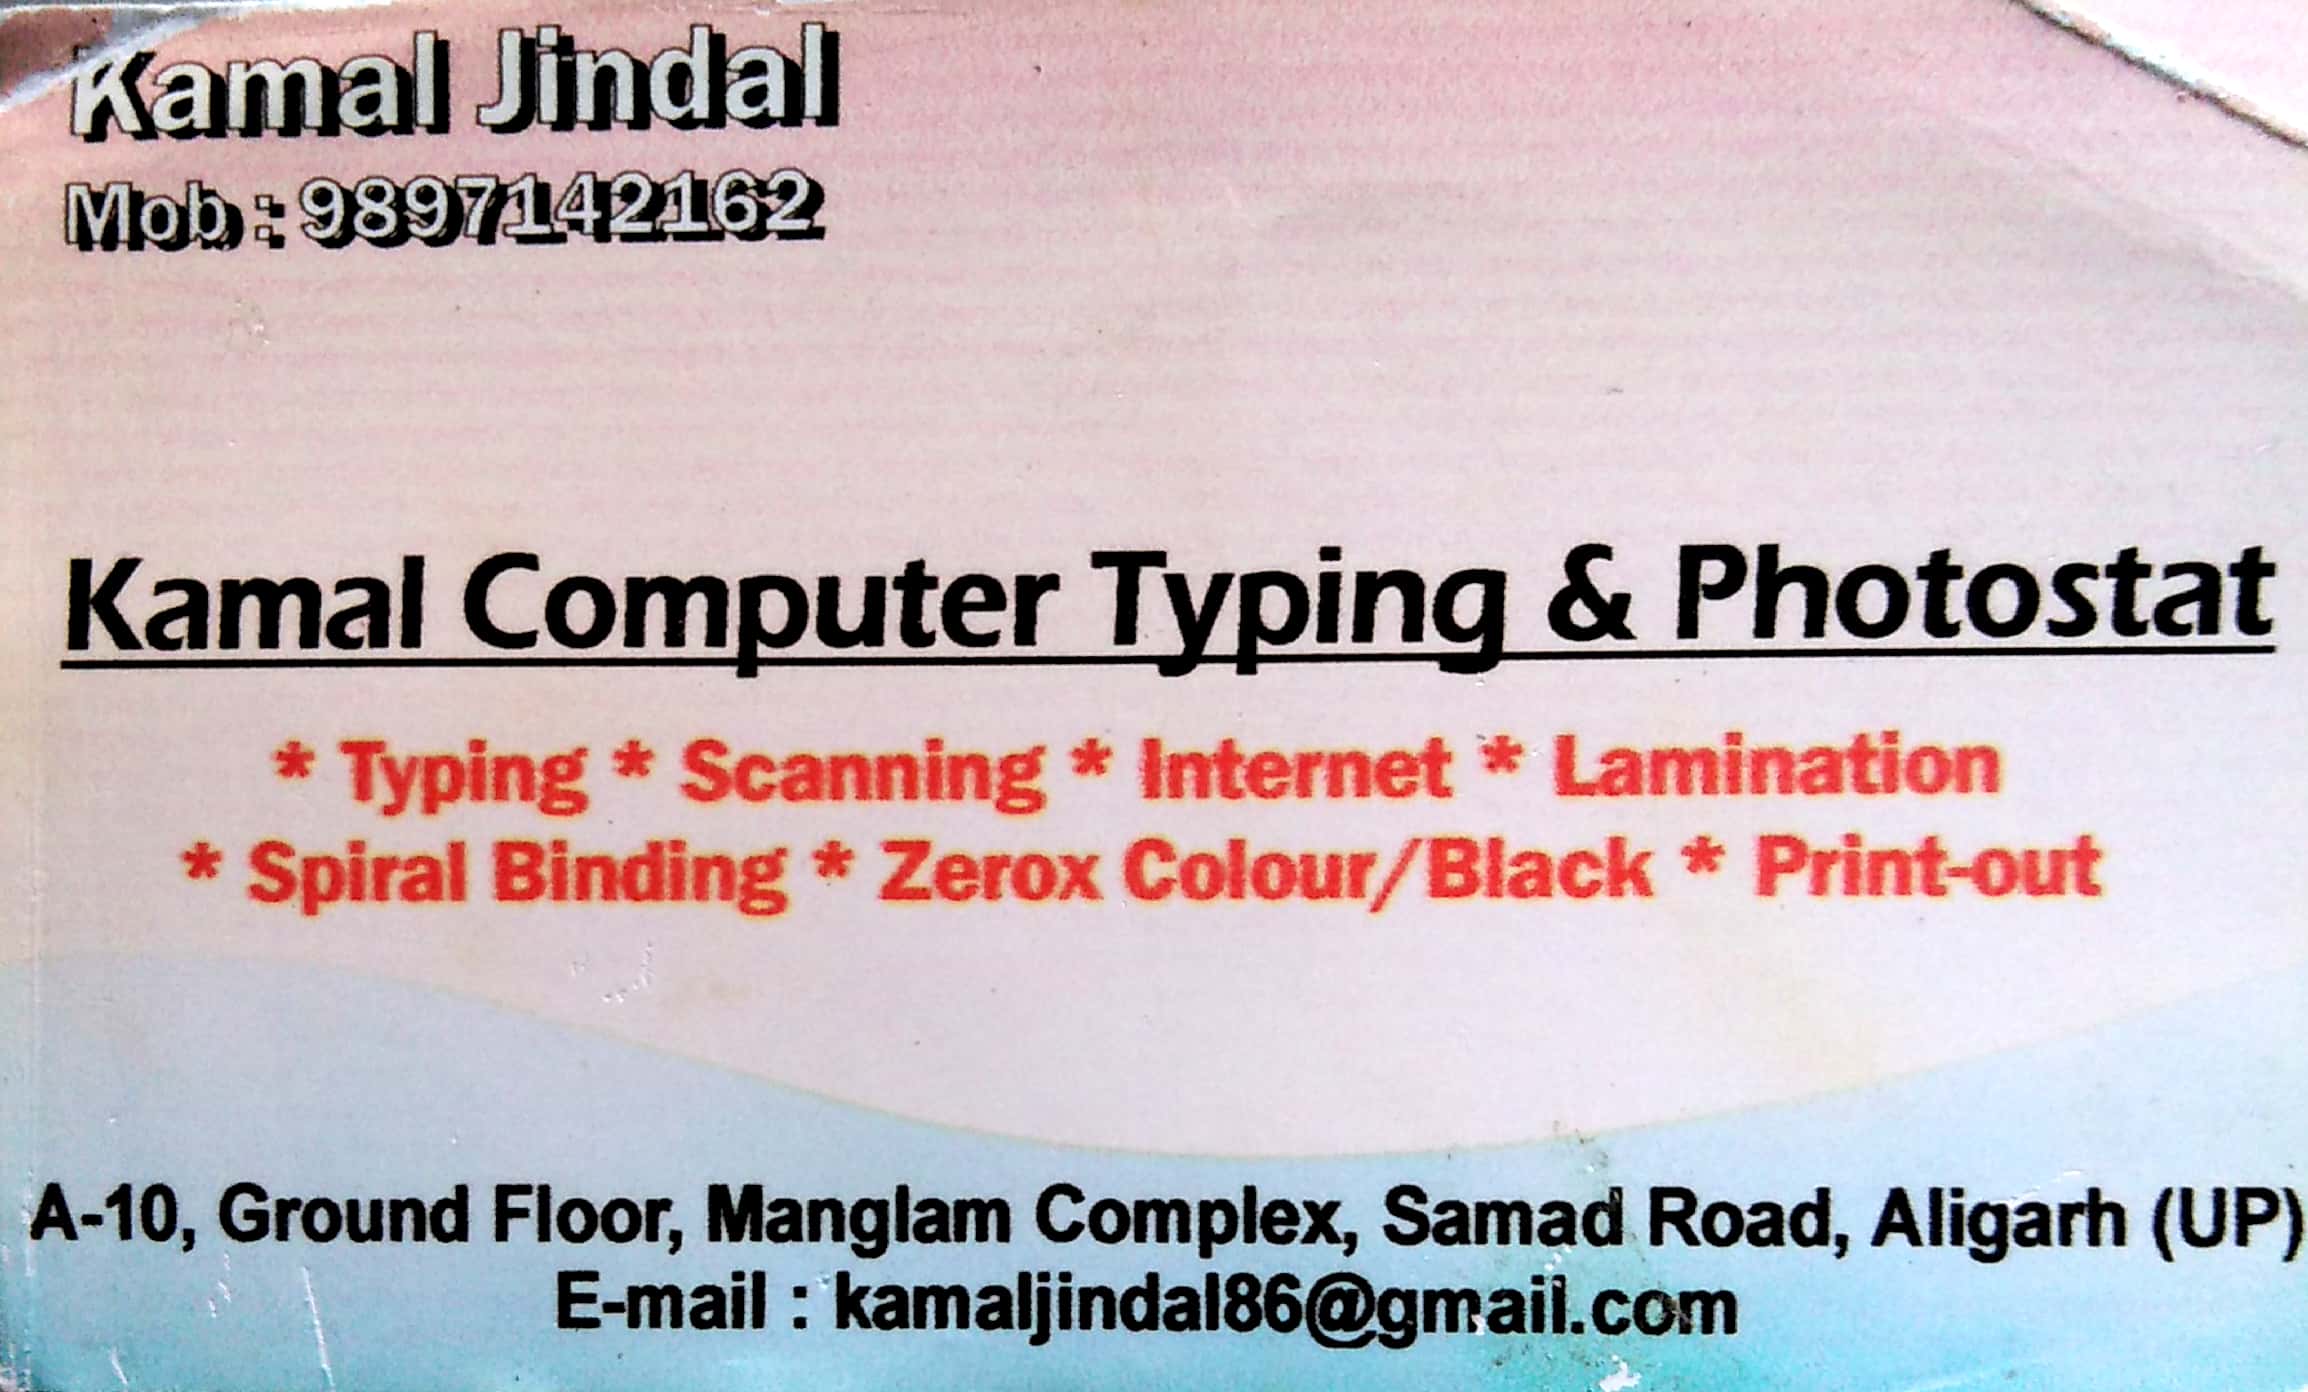 KAMAL COMPUTER TYPING & PHOTOSTATE| BEST COMPUTER WORK IN ALIGARH FAINS-BAZAAR